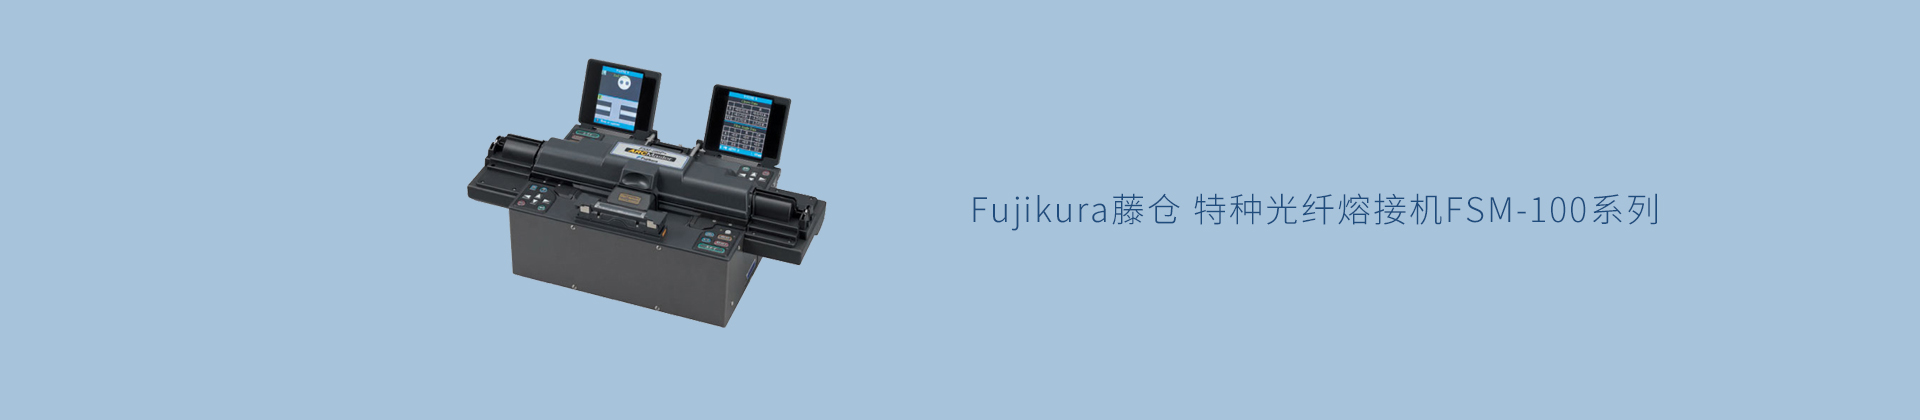 Fujikura藤仓 特种光纤熔接机FSM-100系列